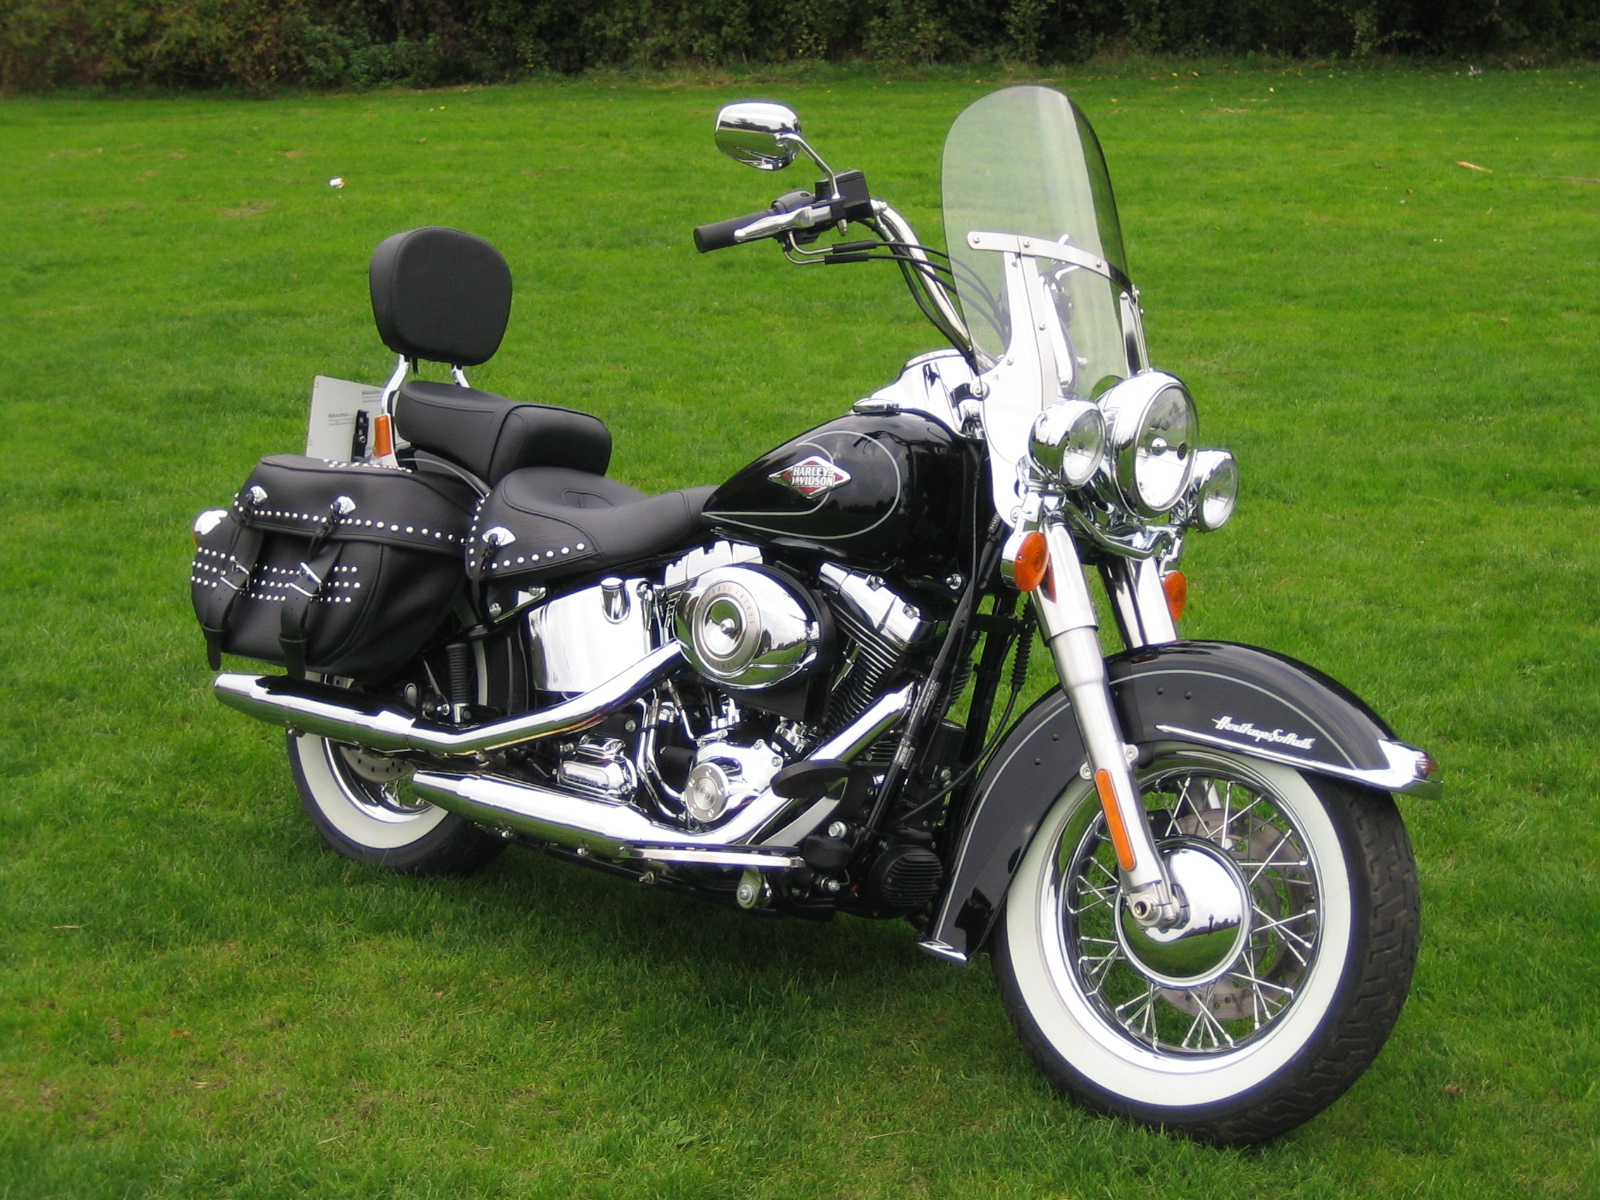 Harley Davidson Takes A Heritage Tour Of England Wheel World Reviews